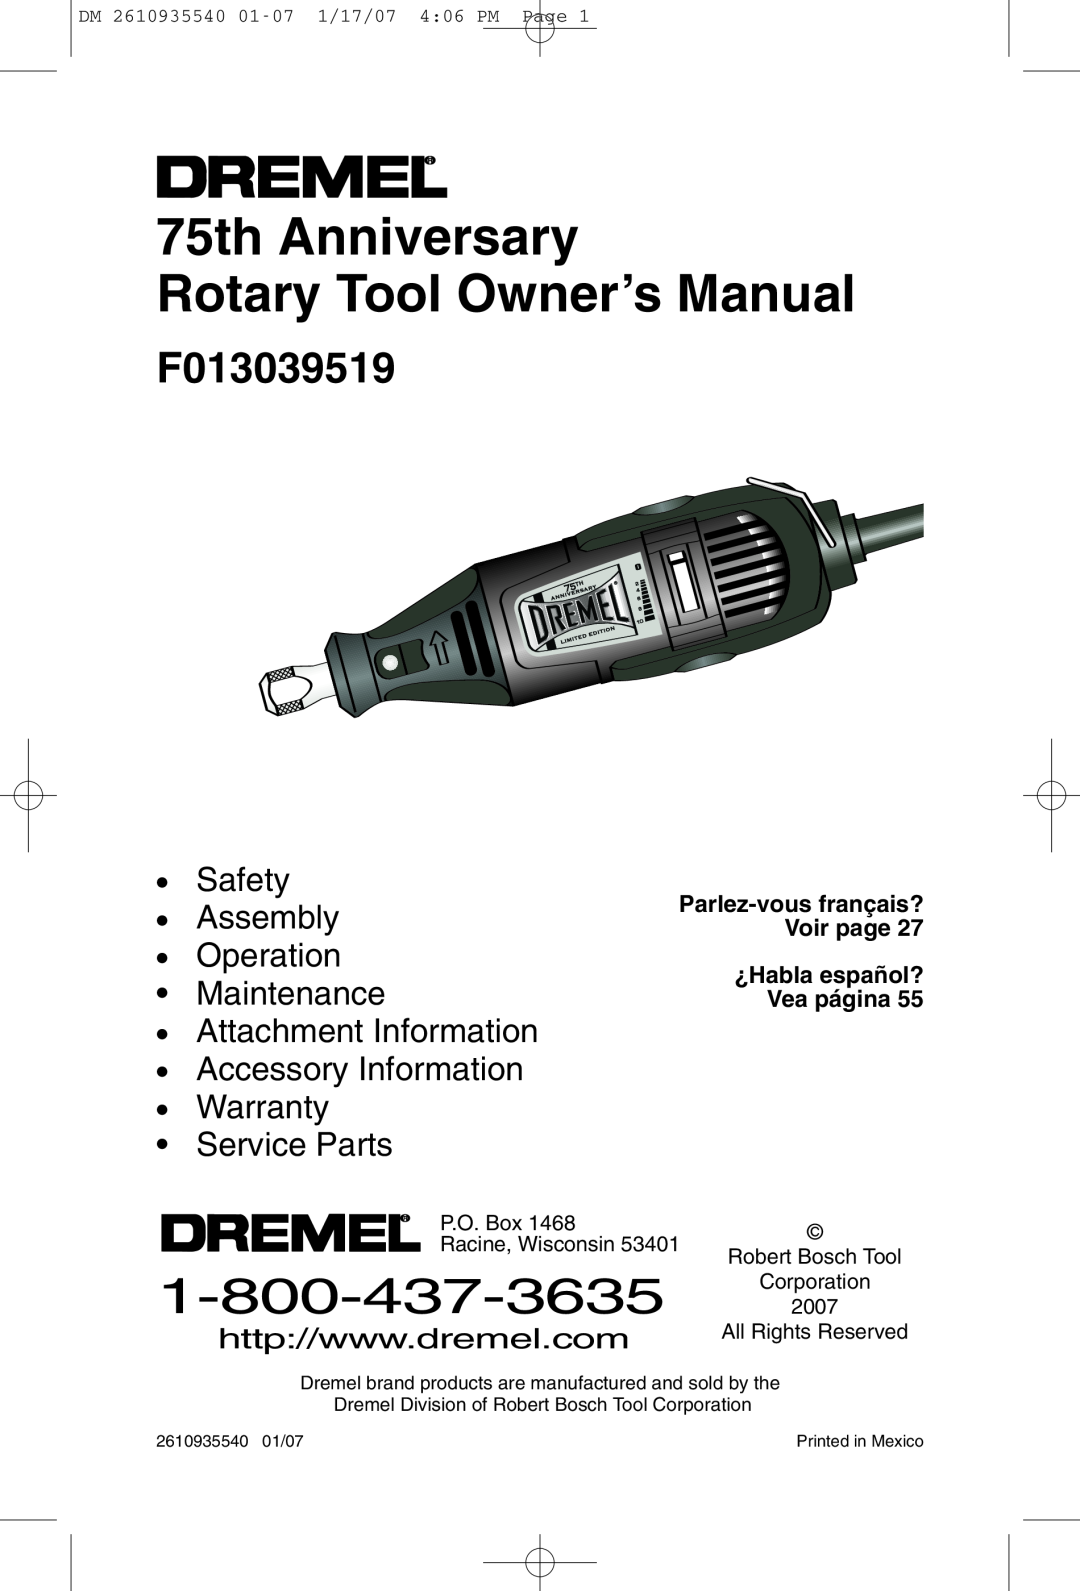 Dremel F013039519 owner manual 75th Anniversary Rotary Tool Owner’s Manual, P.O. Box, Racine, Wisconsin 